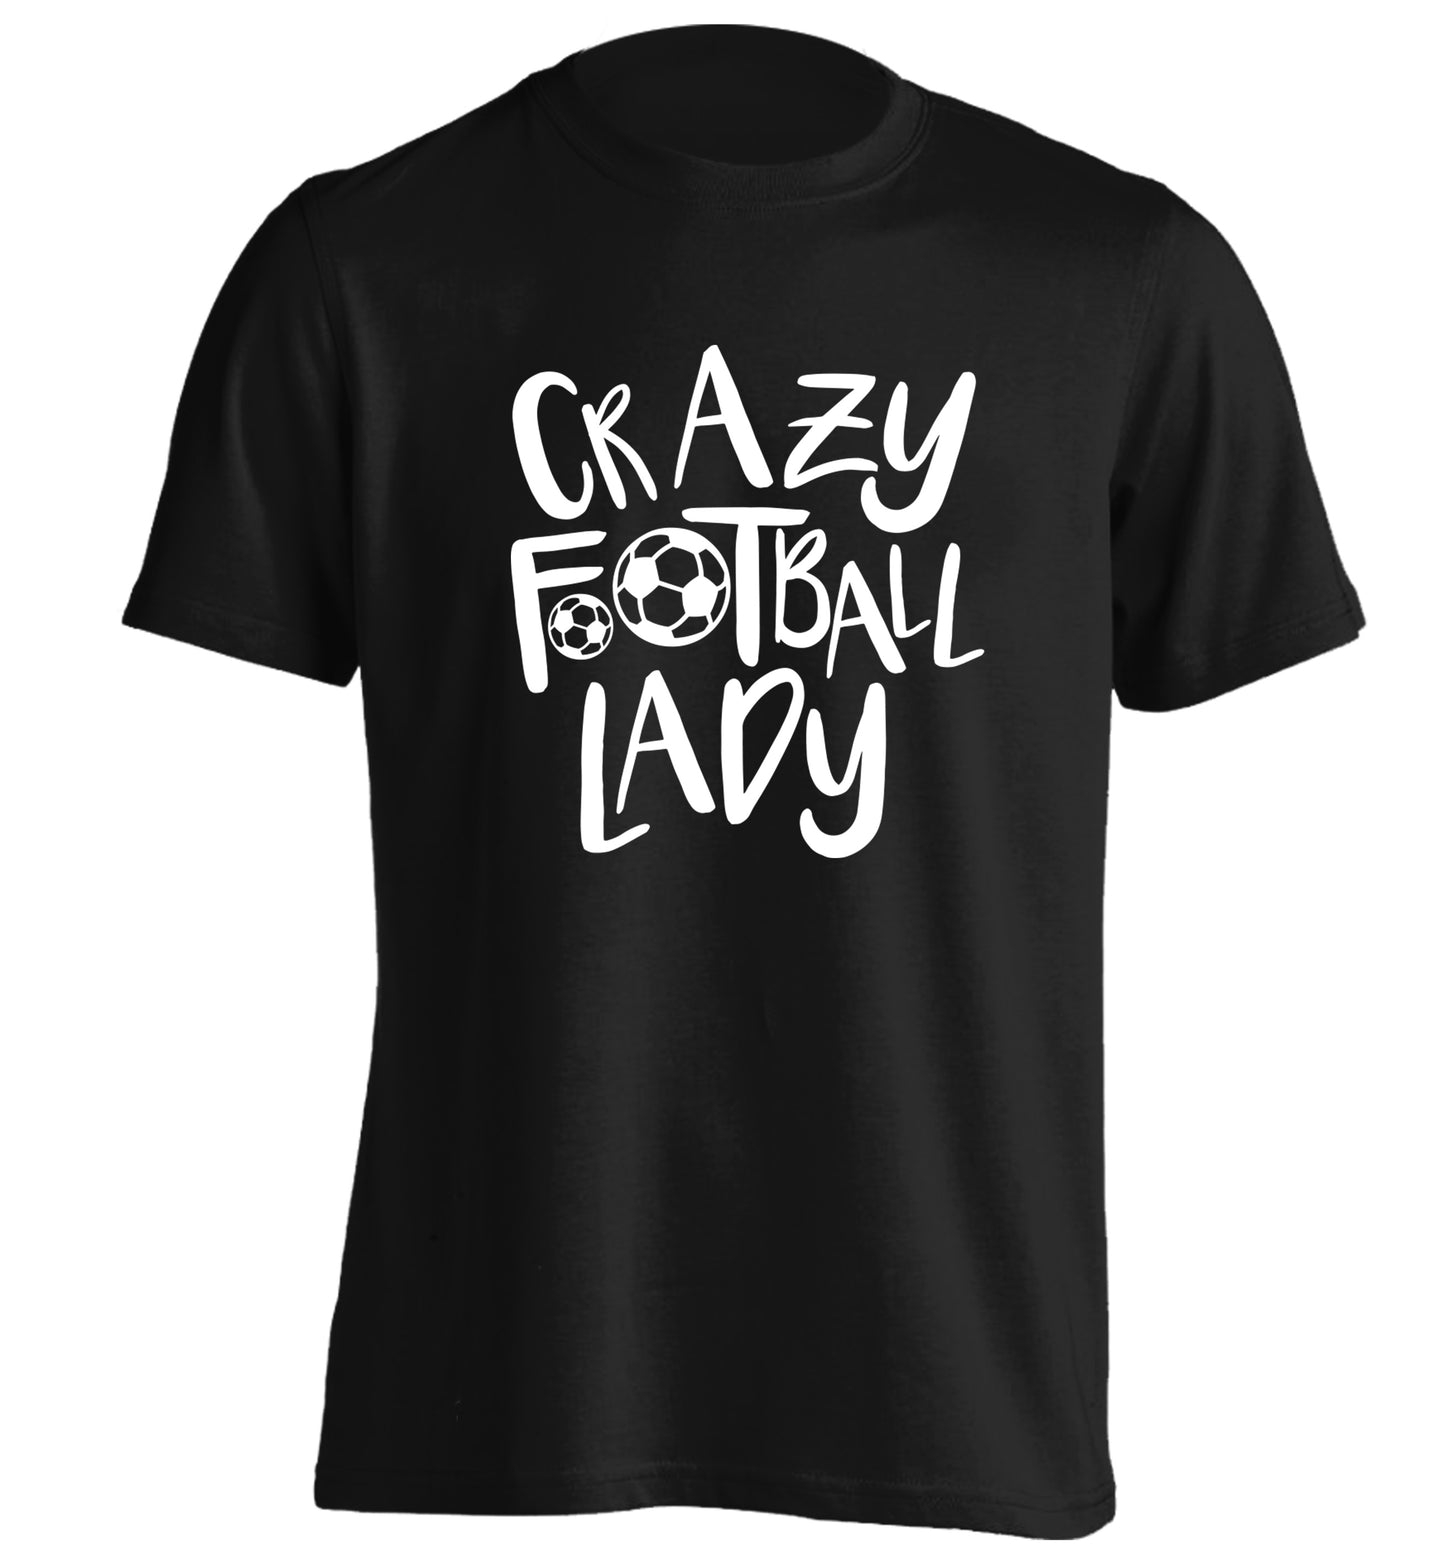 Crazy football lady adults unisexblack Tshirt 2XL